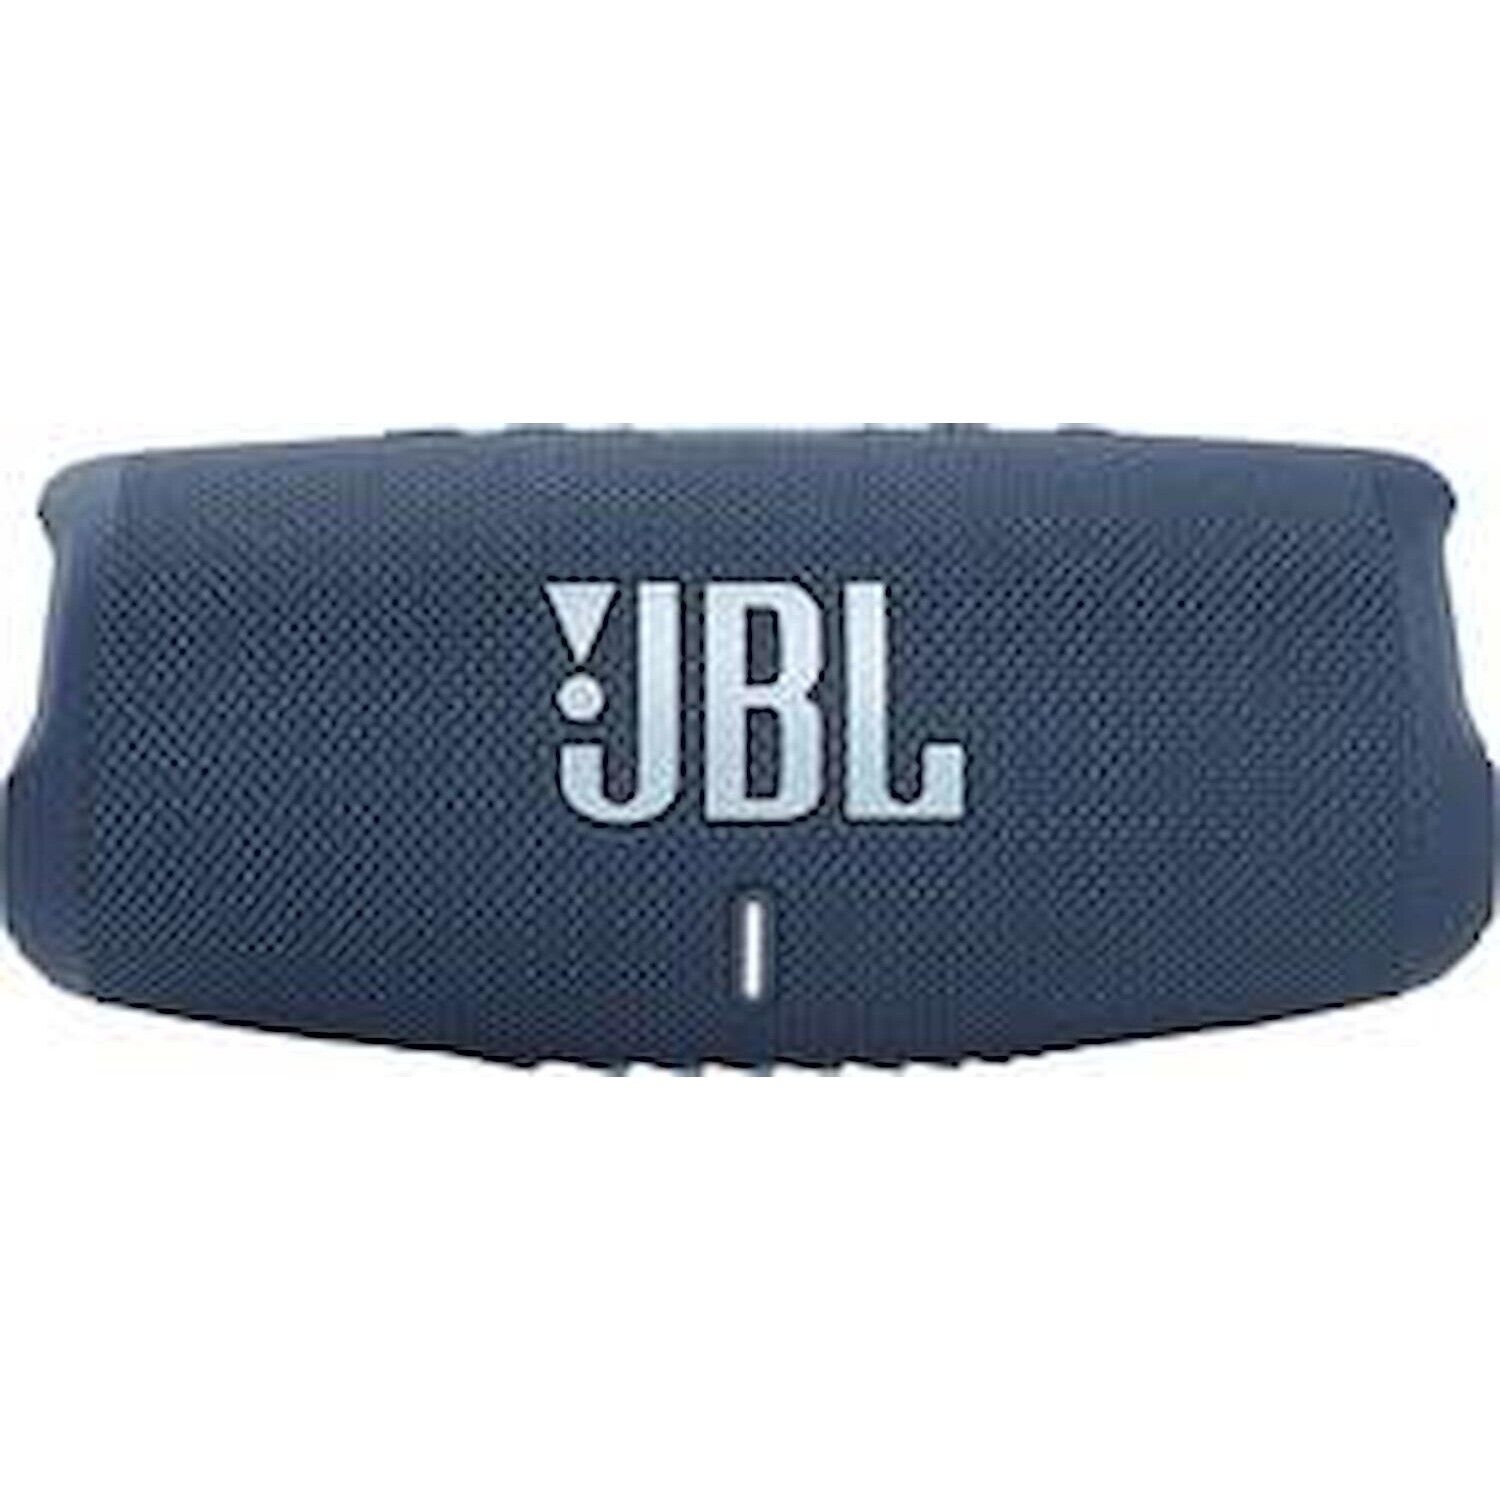 Jbl Charge 5 Speaker Bluetooth Portatile Cassa Altoparlante Wireless Resistente